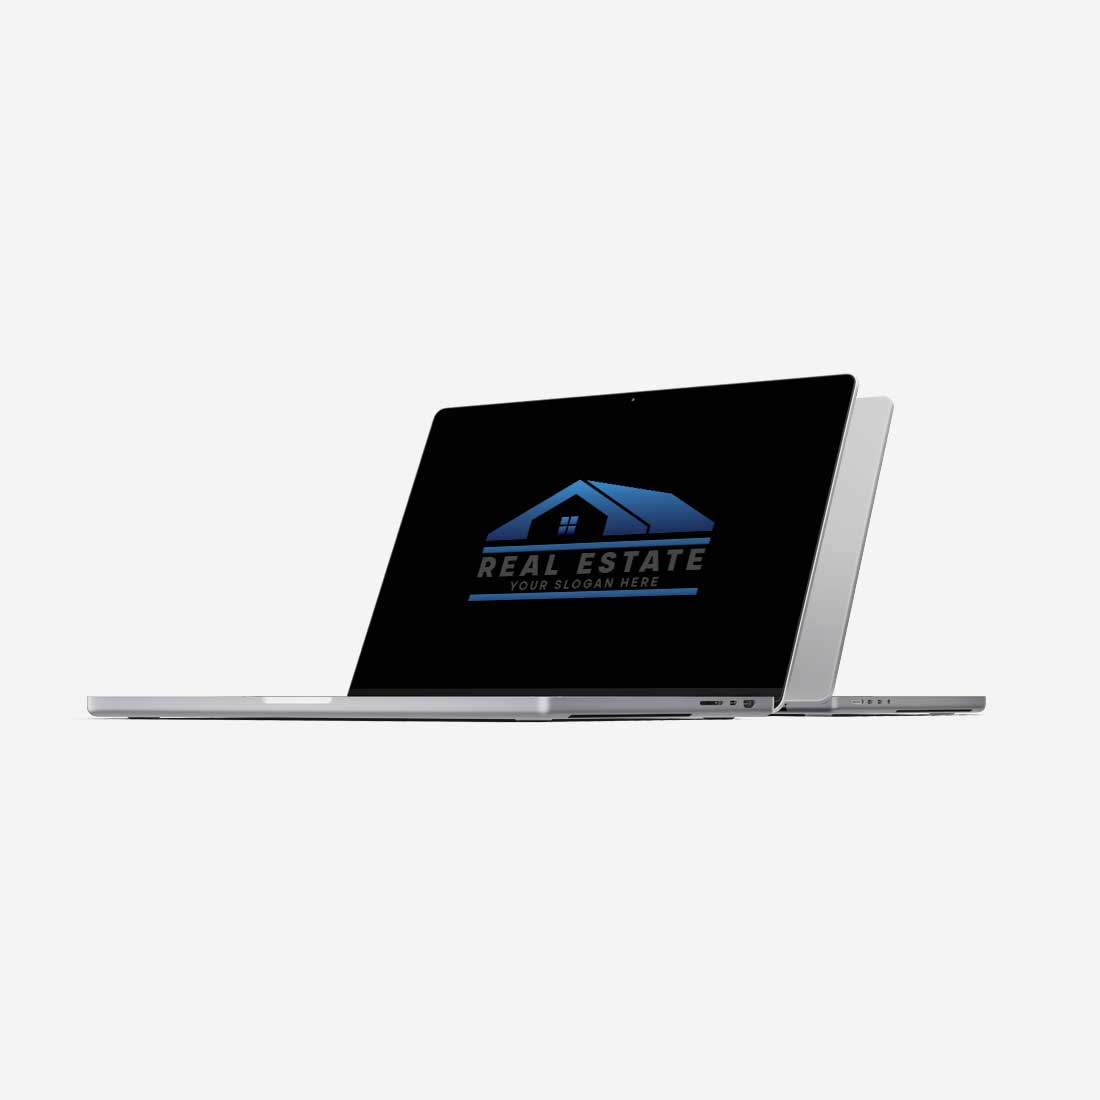 Luxury Real Estate Logo laptop mockup.